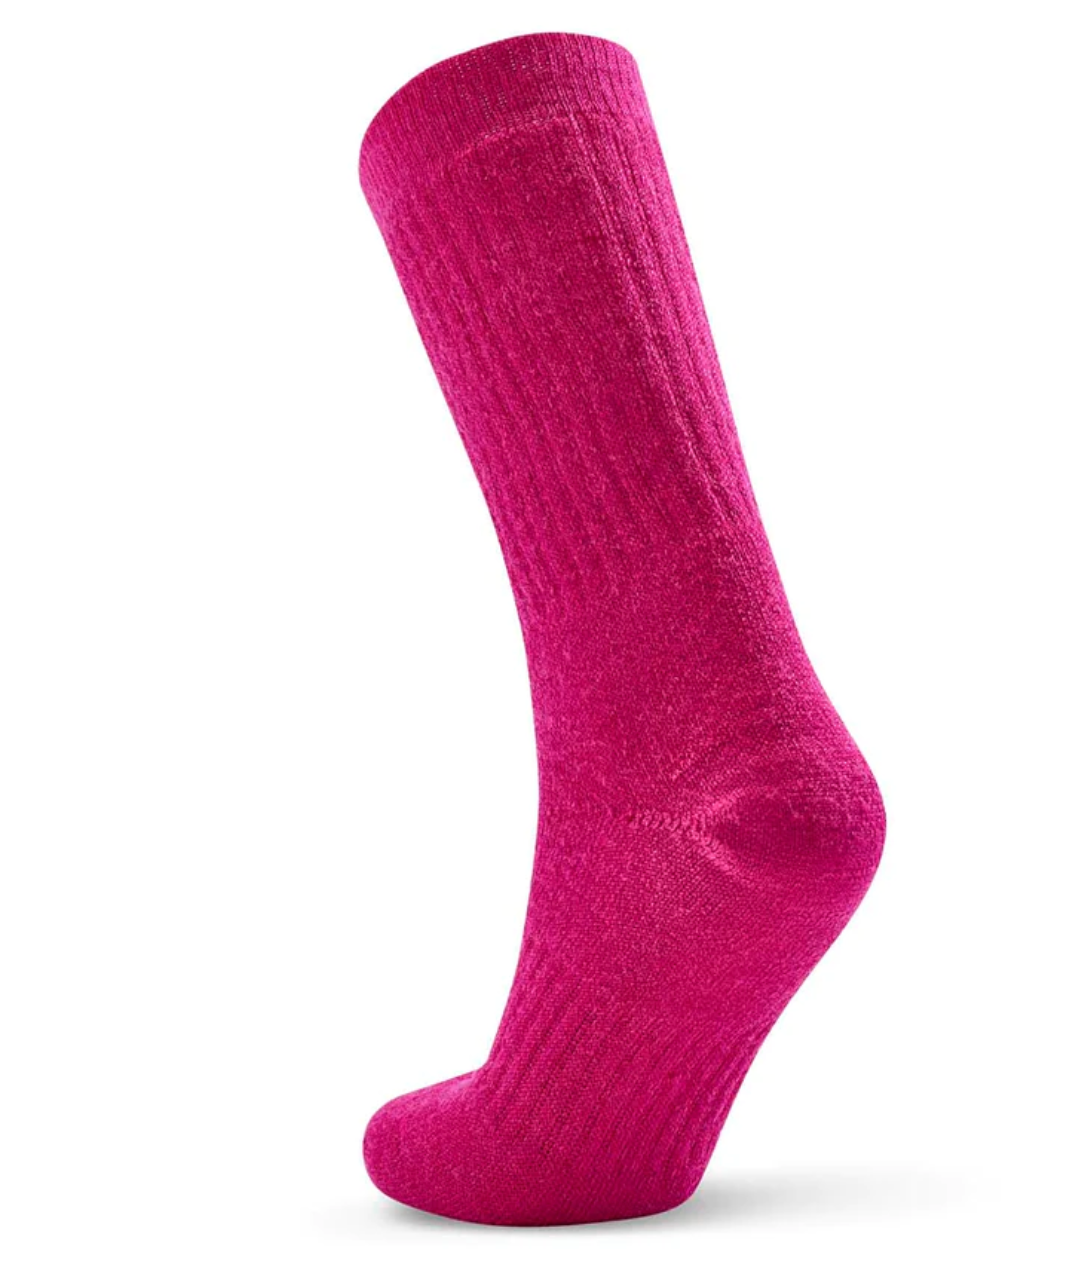 Southern Merino Wool Boot Socks in Pink